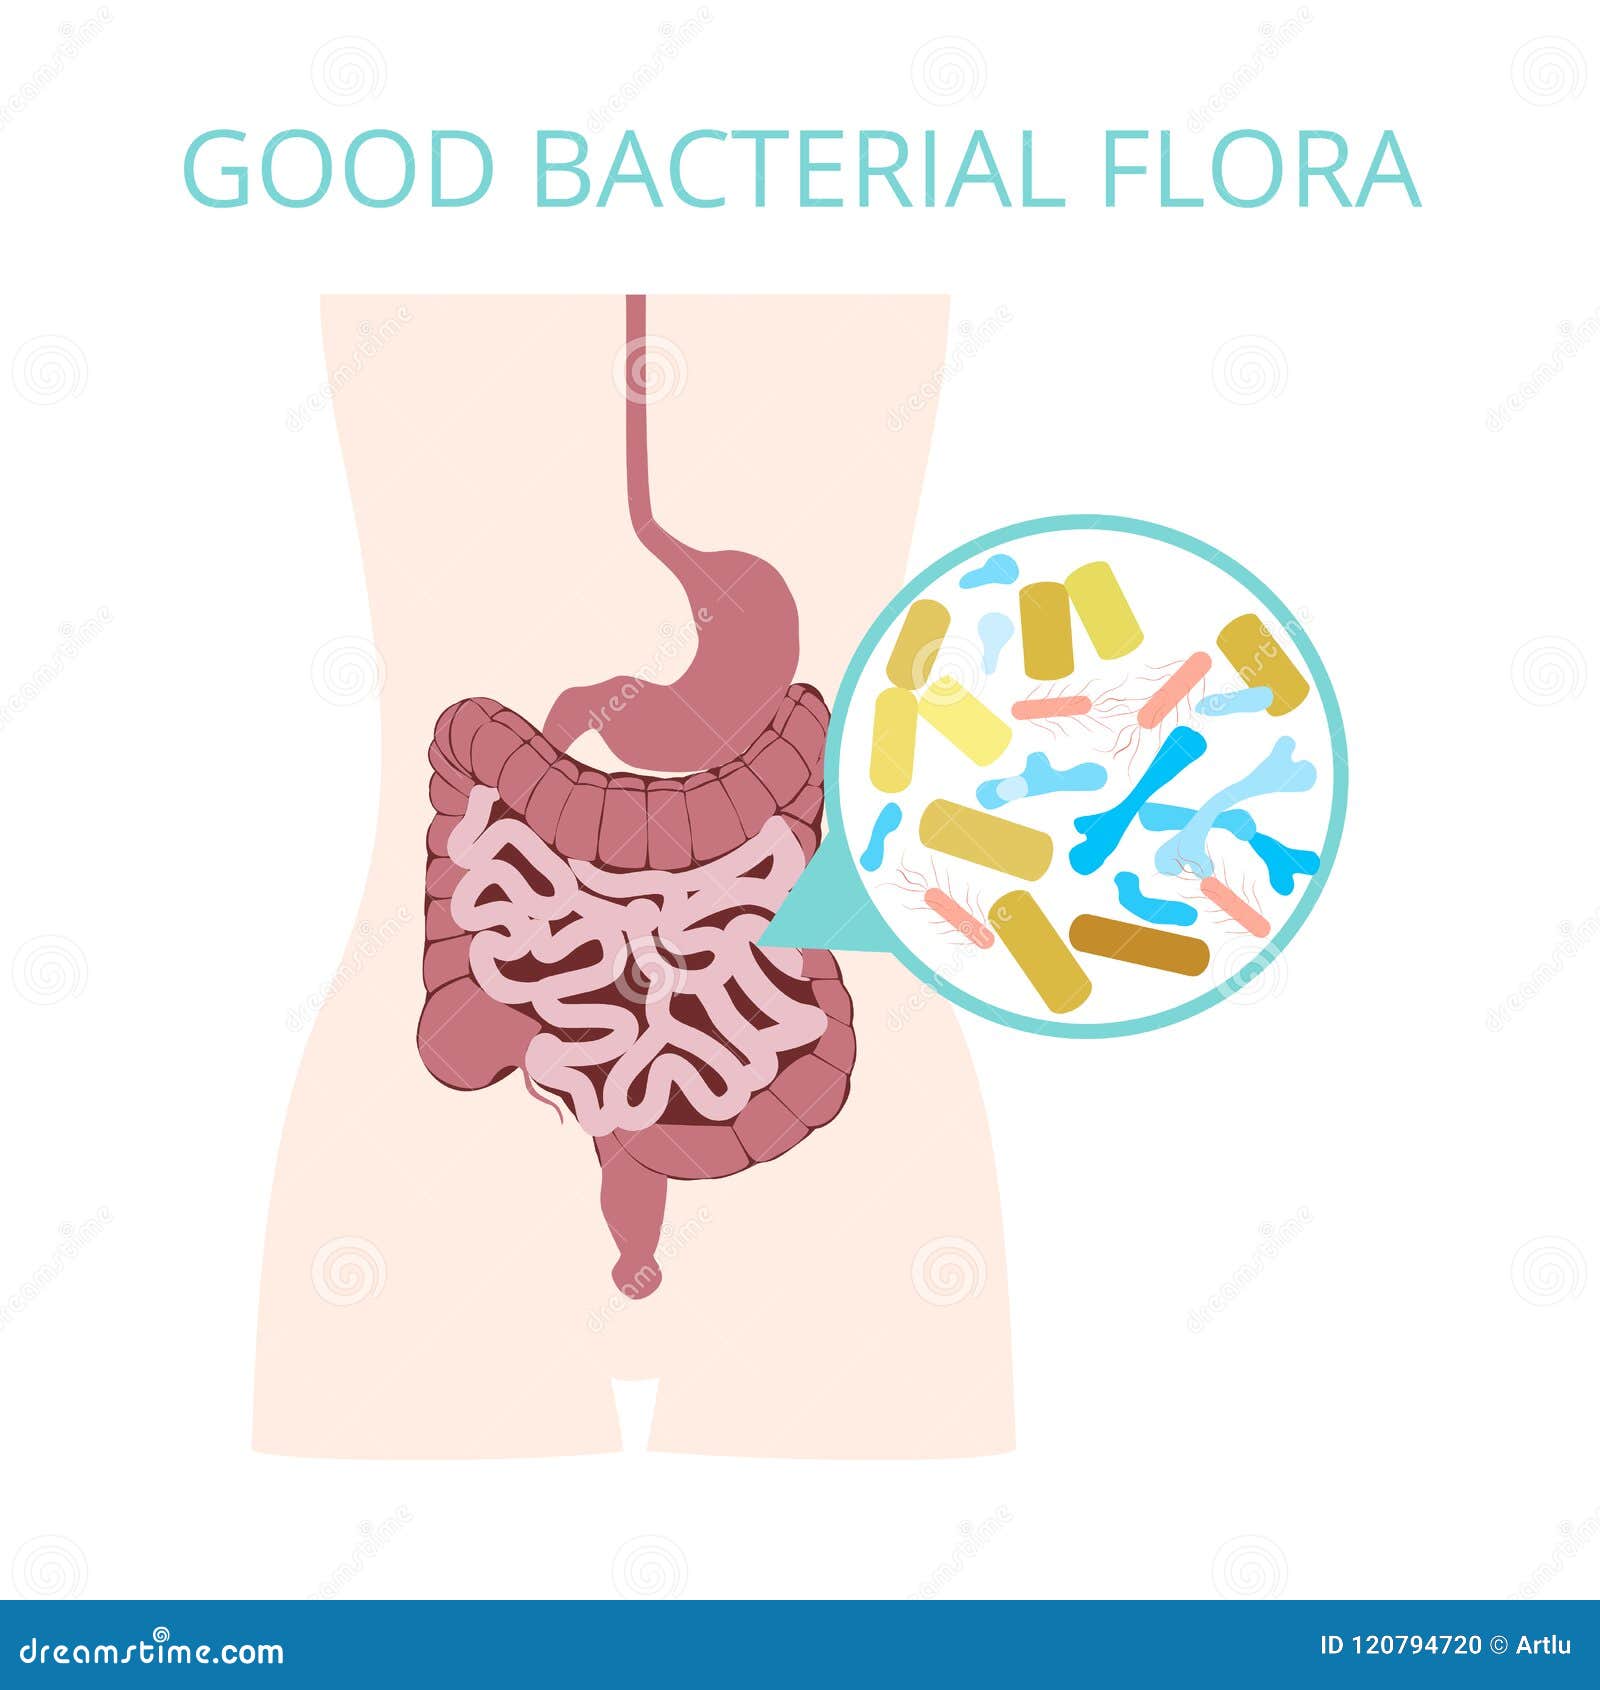 good bacterial flora. lactobacilli, bifidobacteria, escherichia